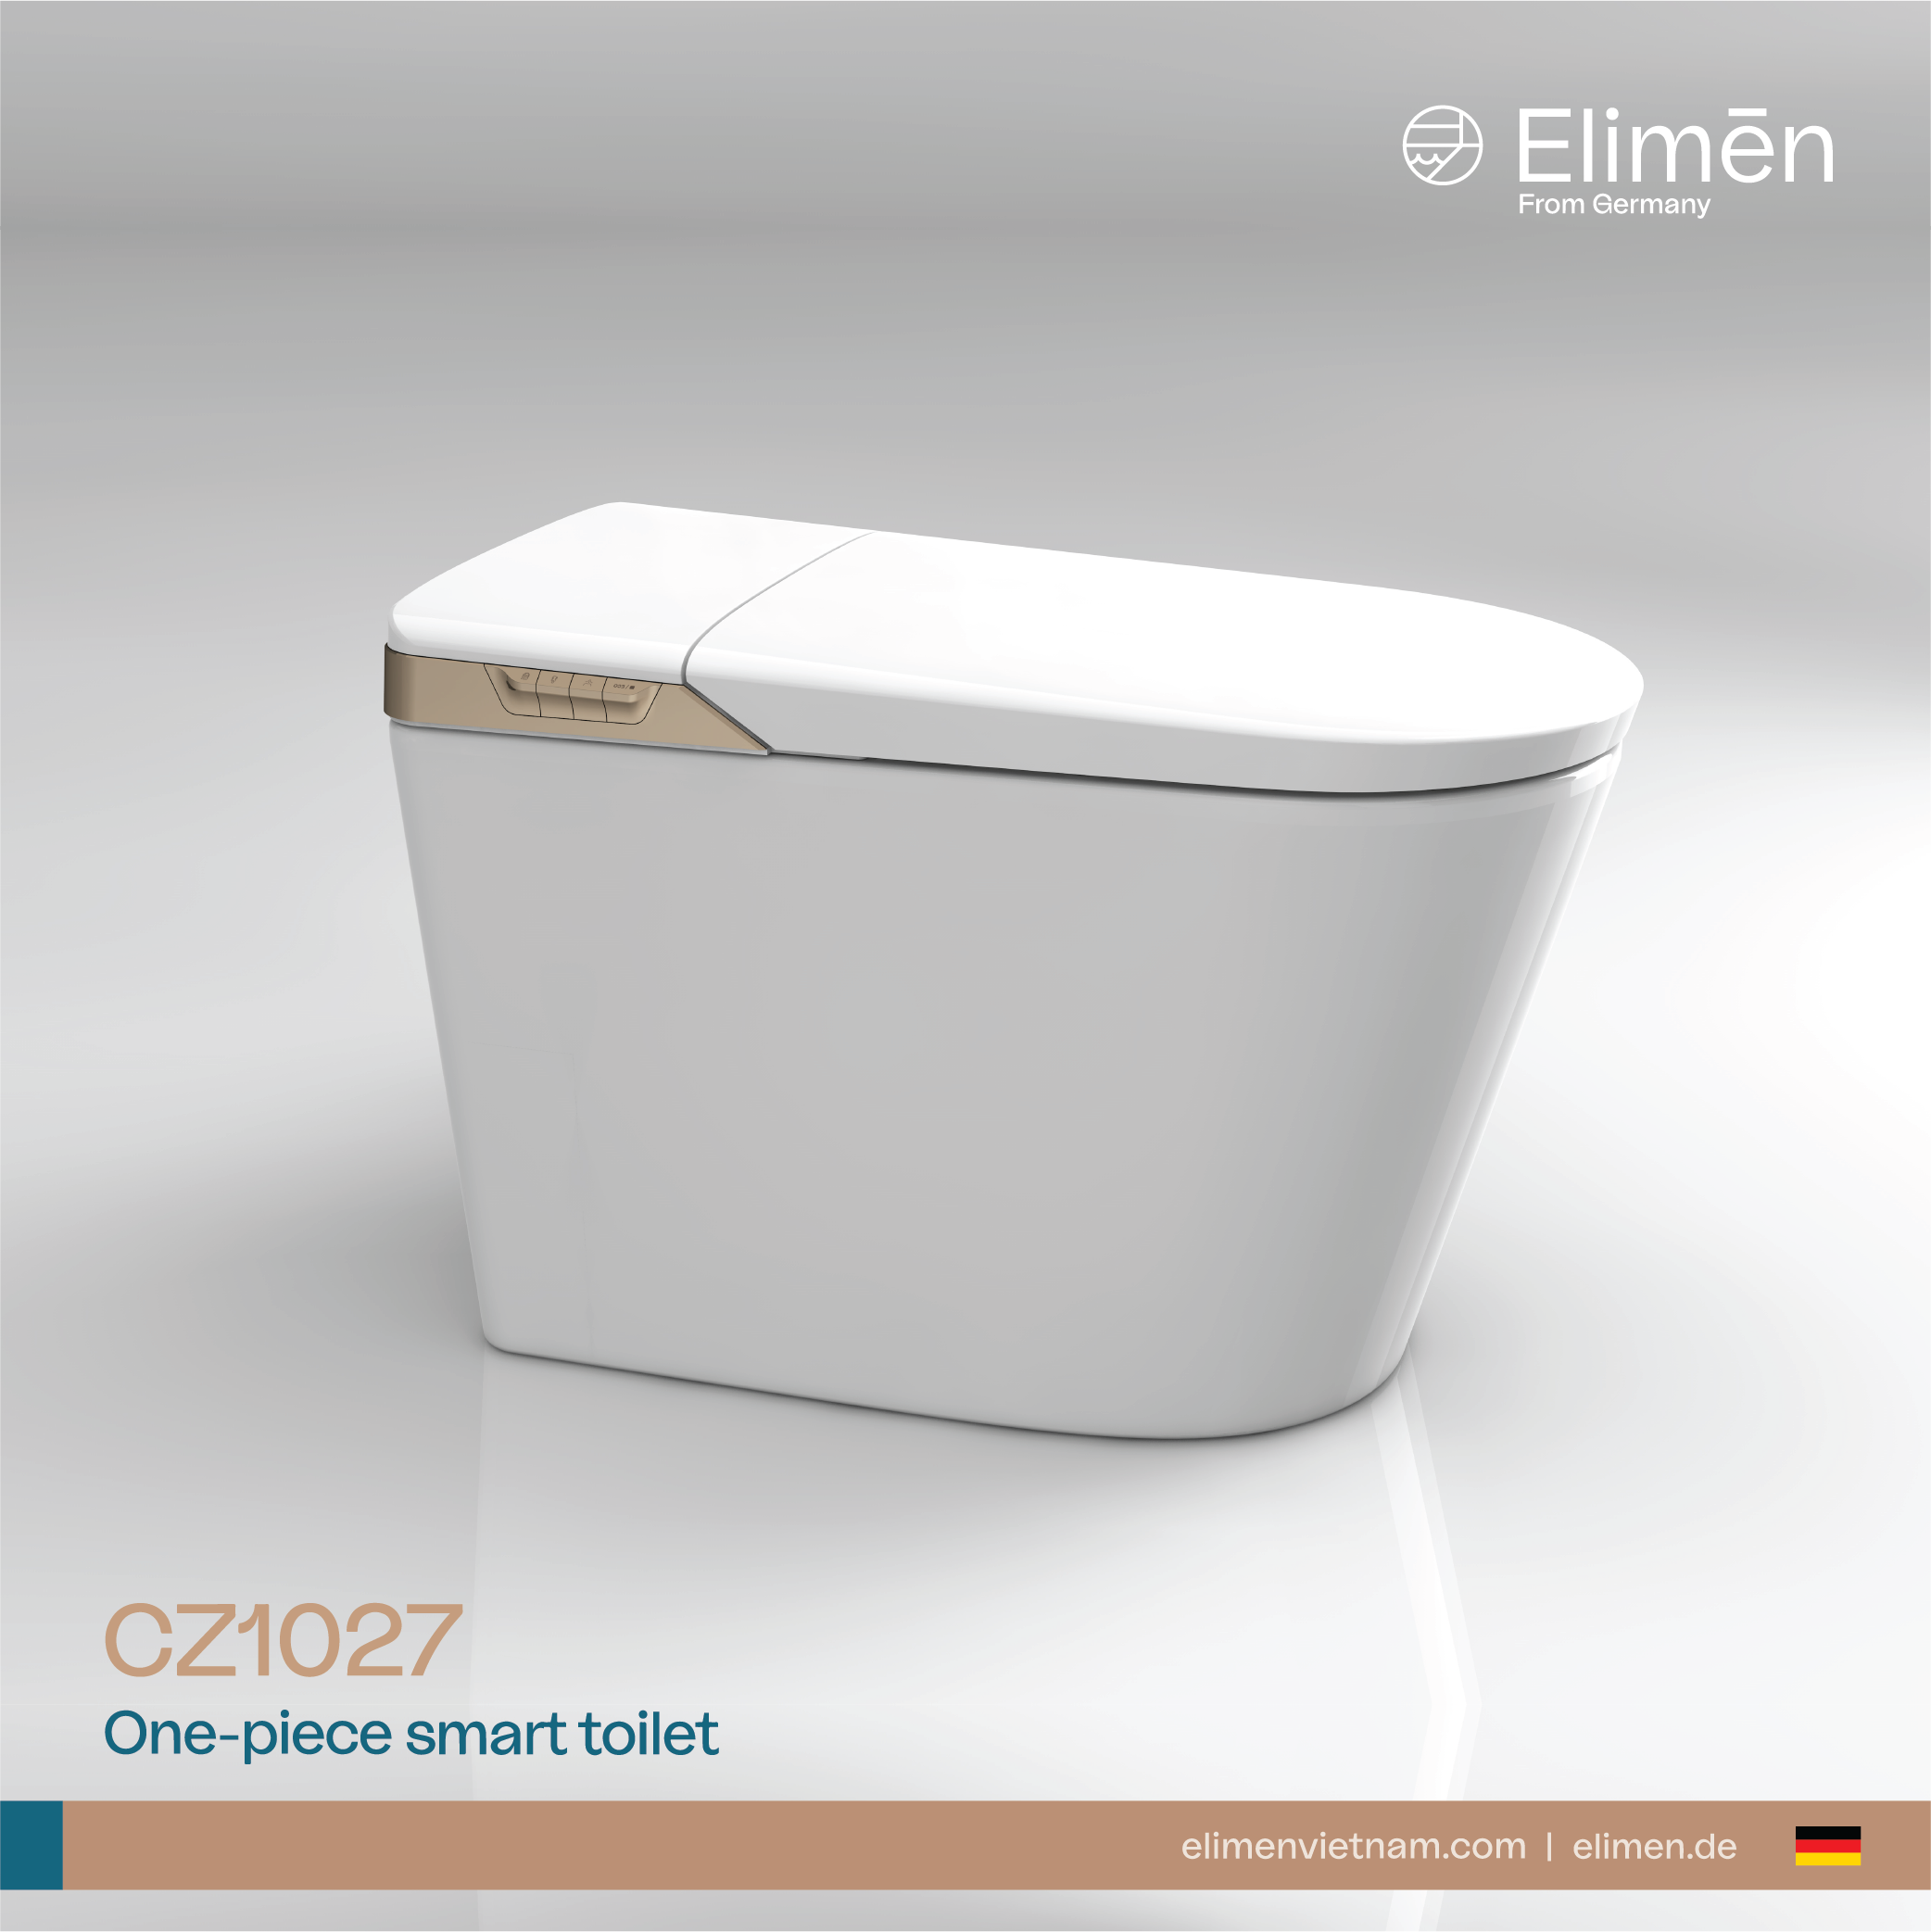 Elimen intelligent toilet - Code A9-305